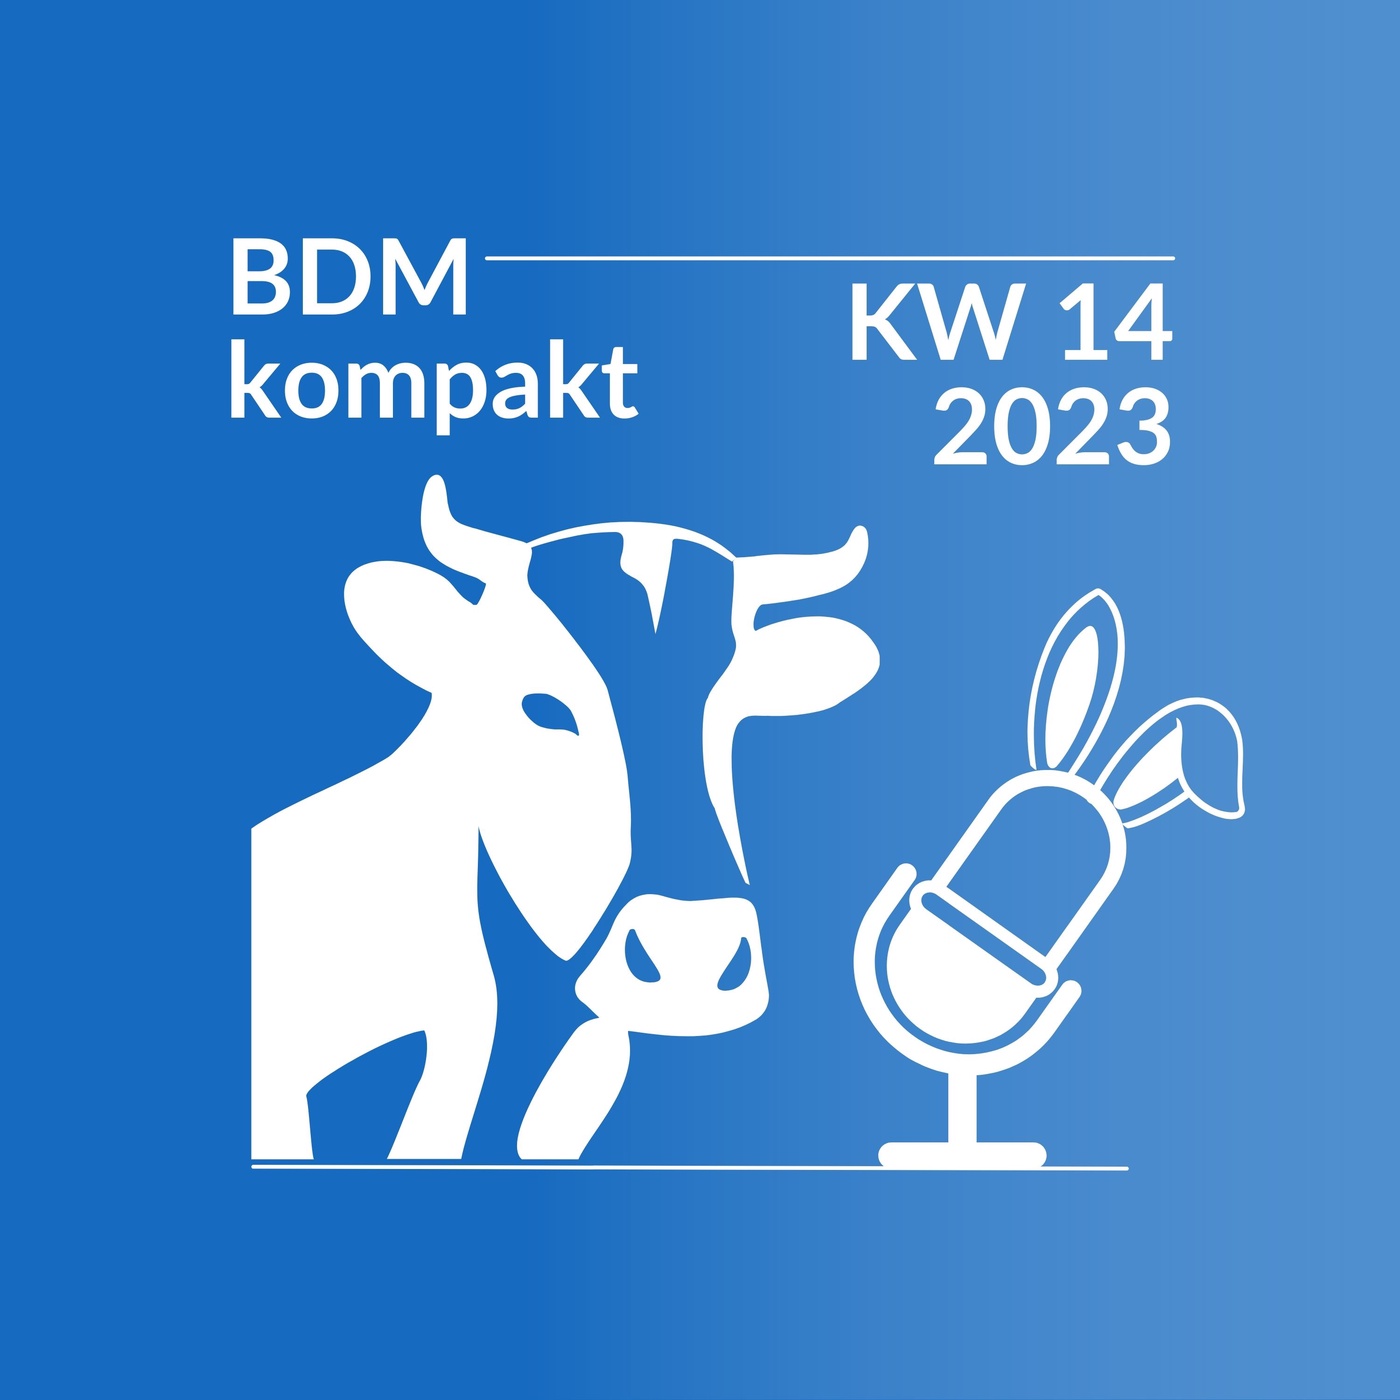 BDM kompakt KW 14/2023